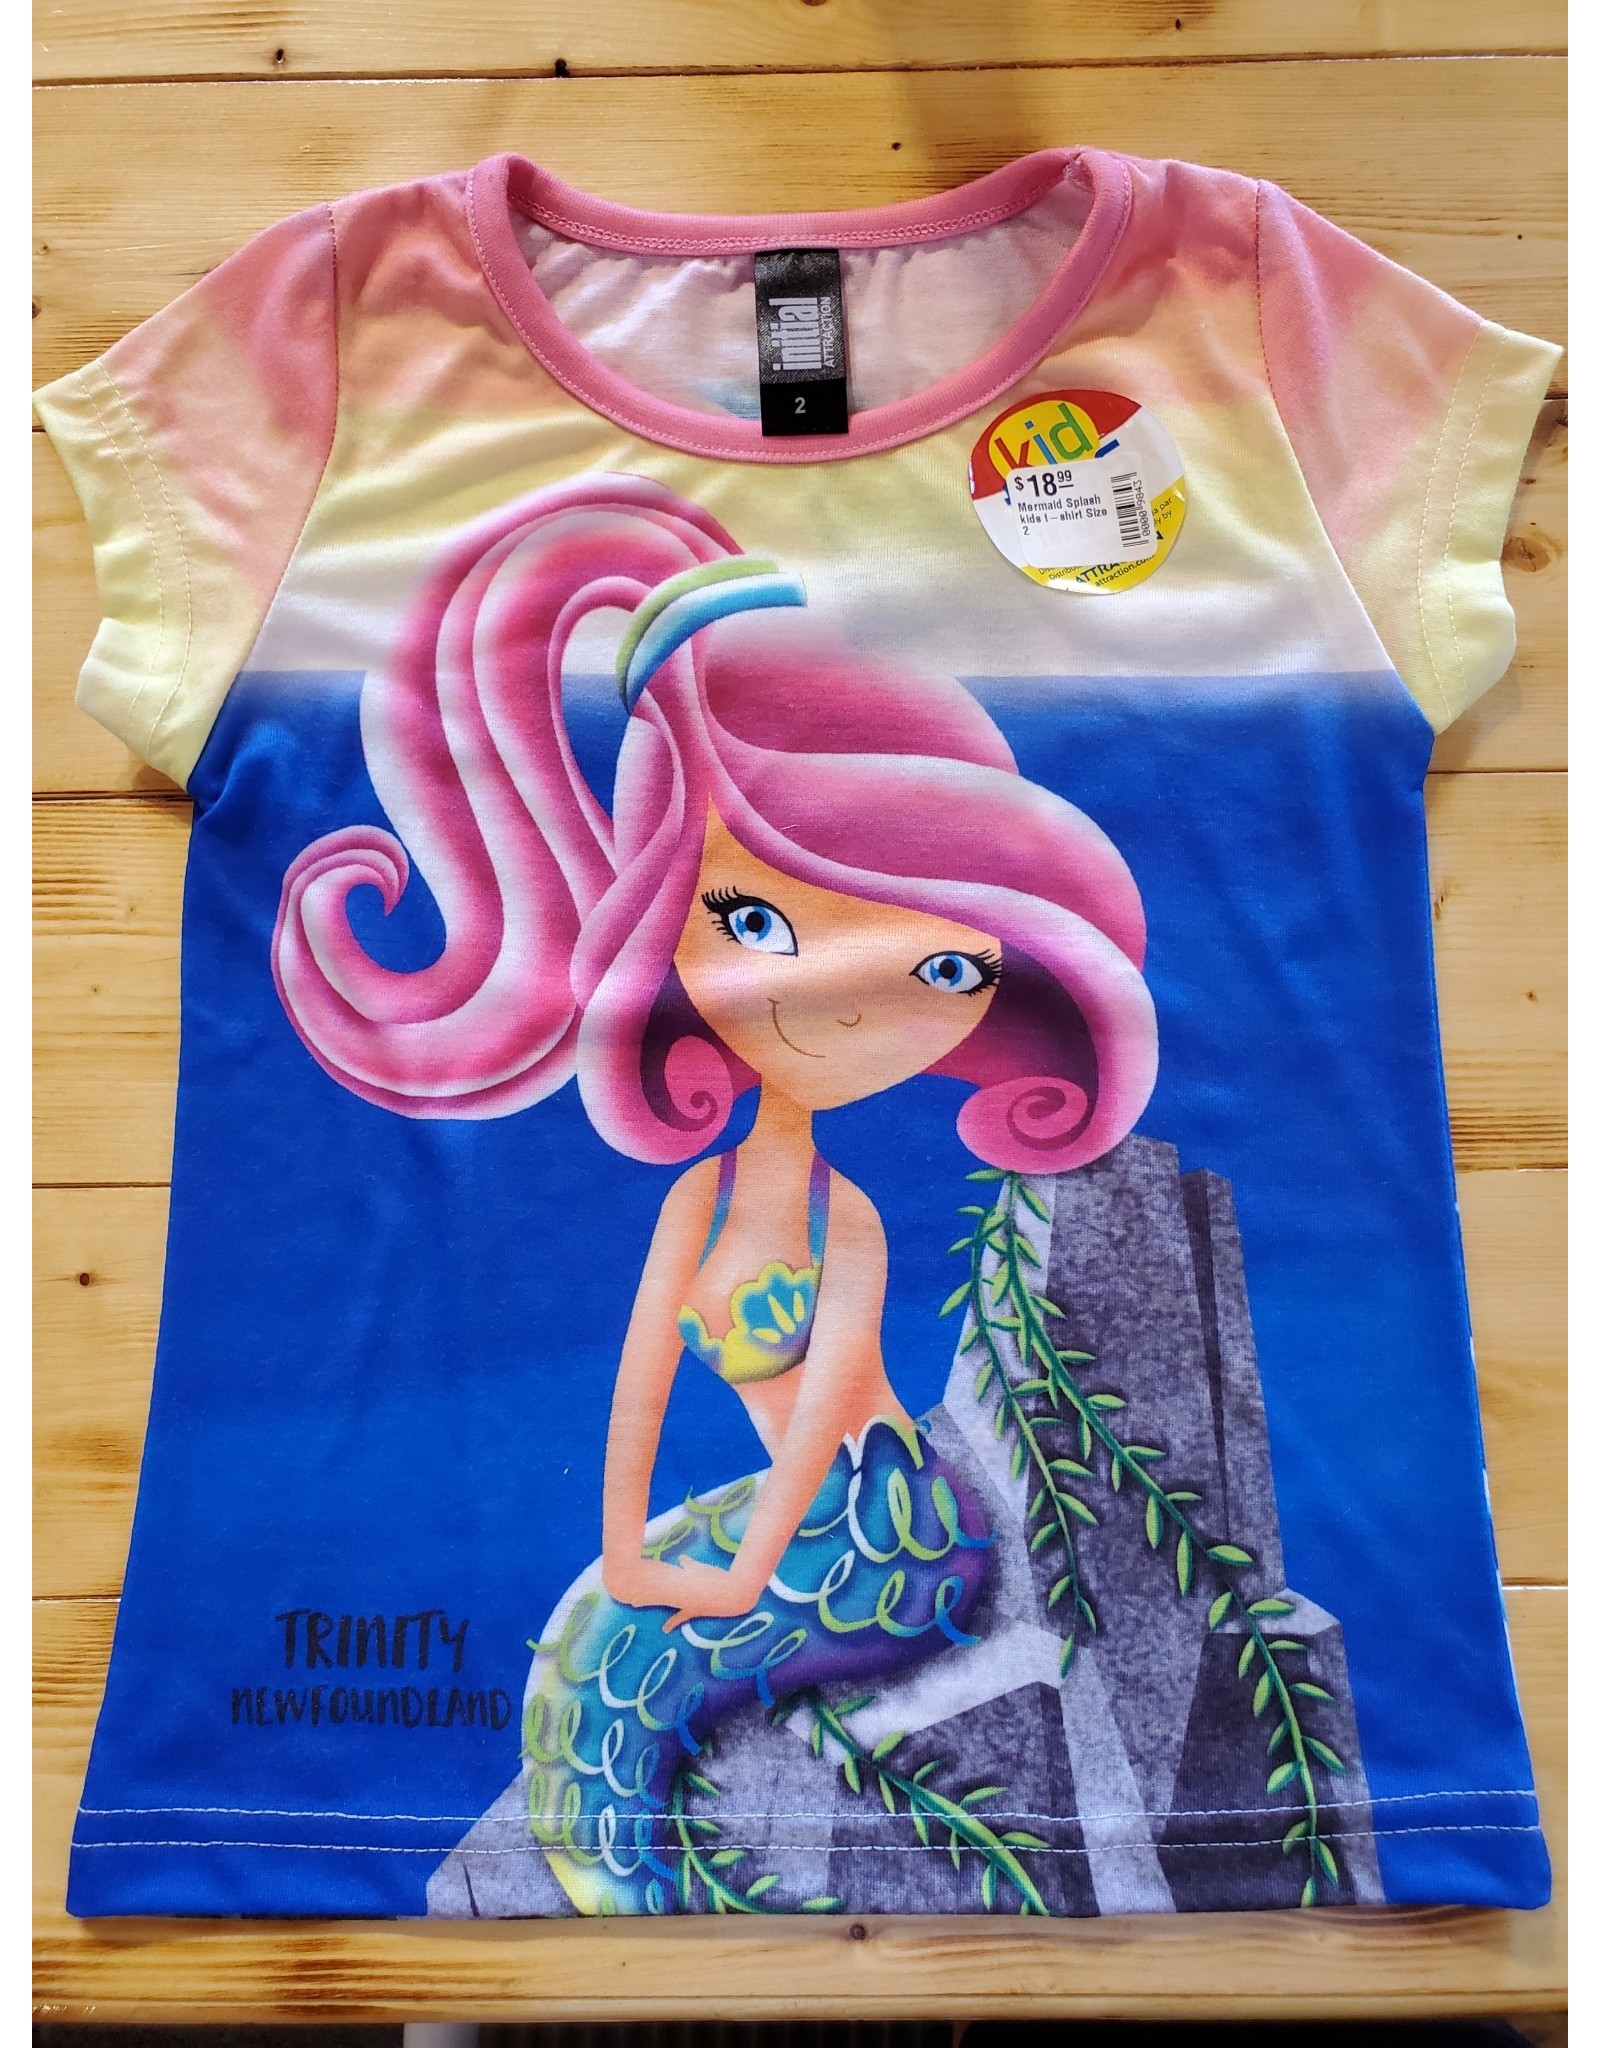 Attraction Mermaid Splash kids t-shirt